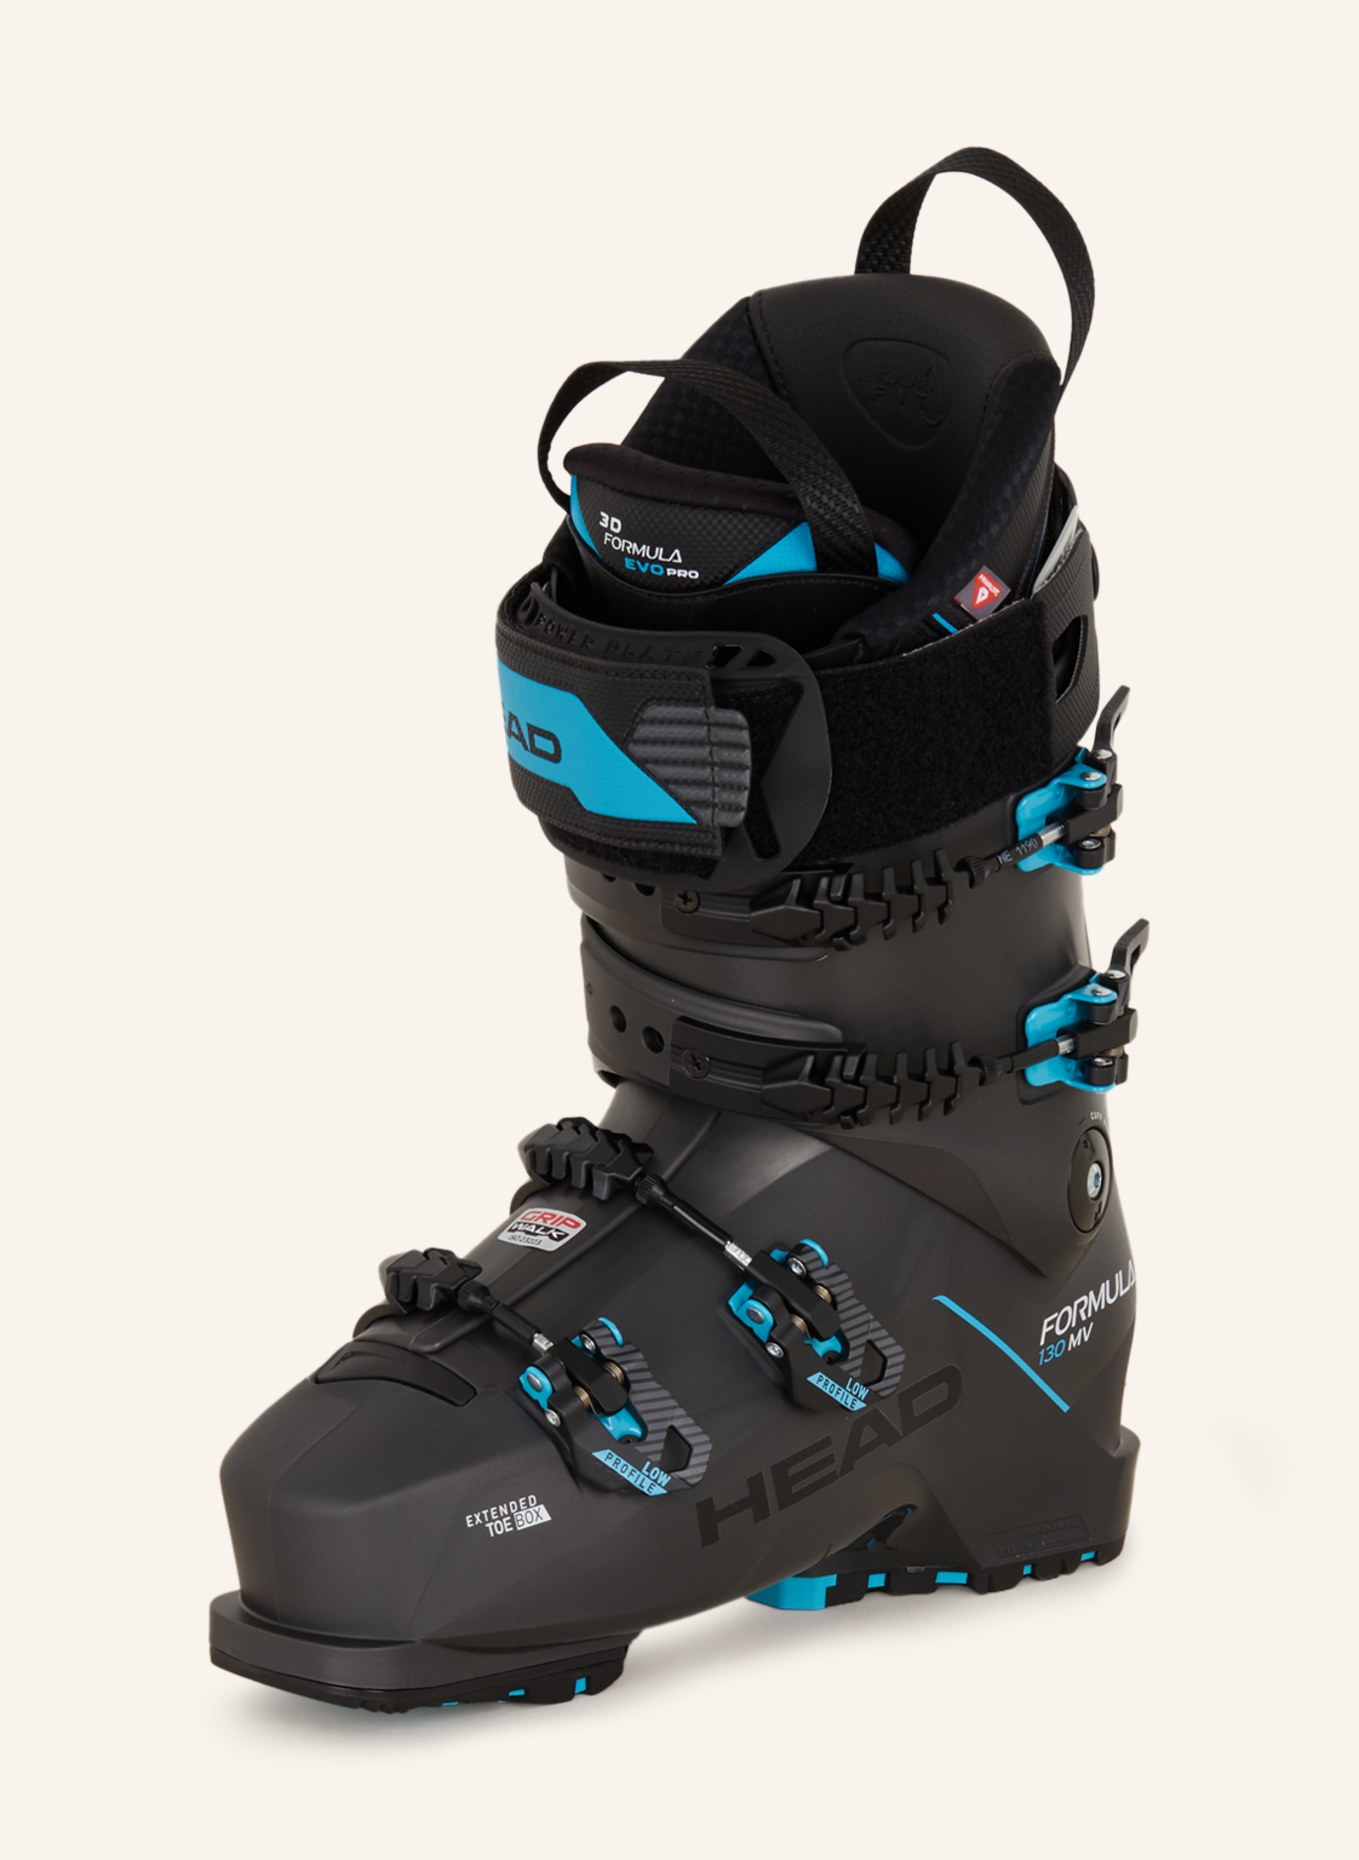 Ski Boots Formula – HEAD